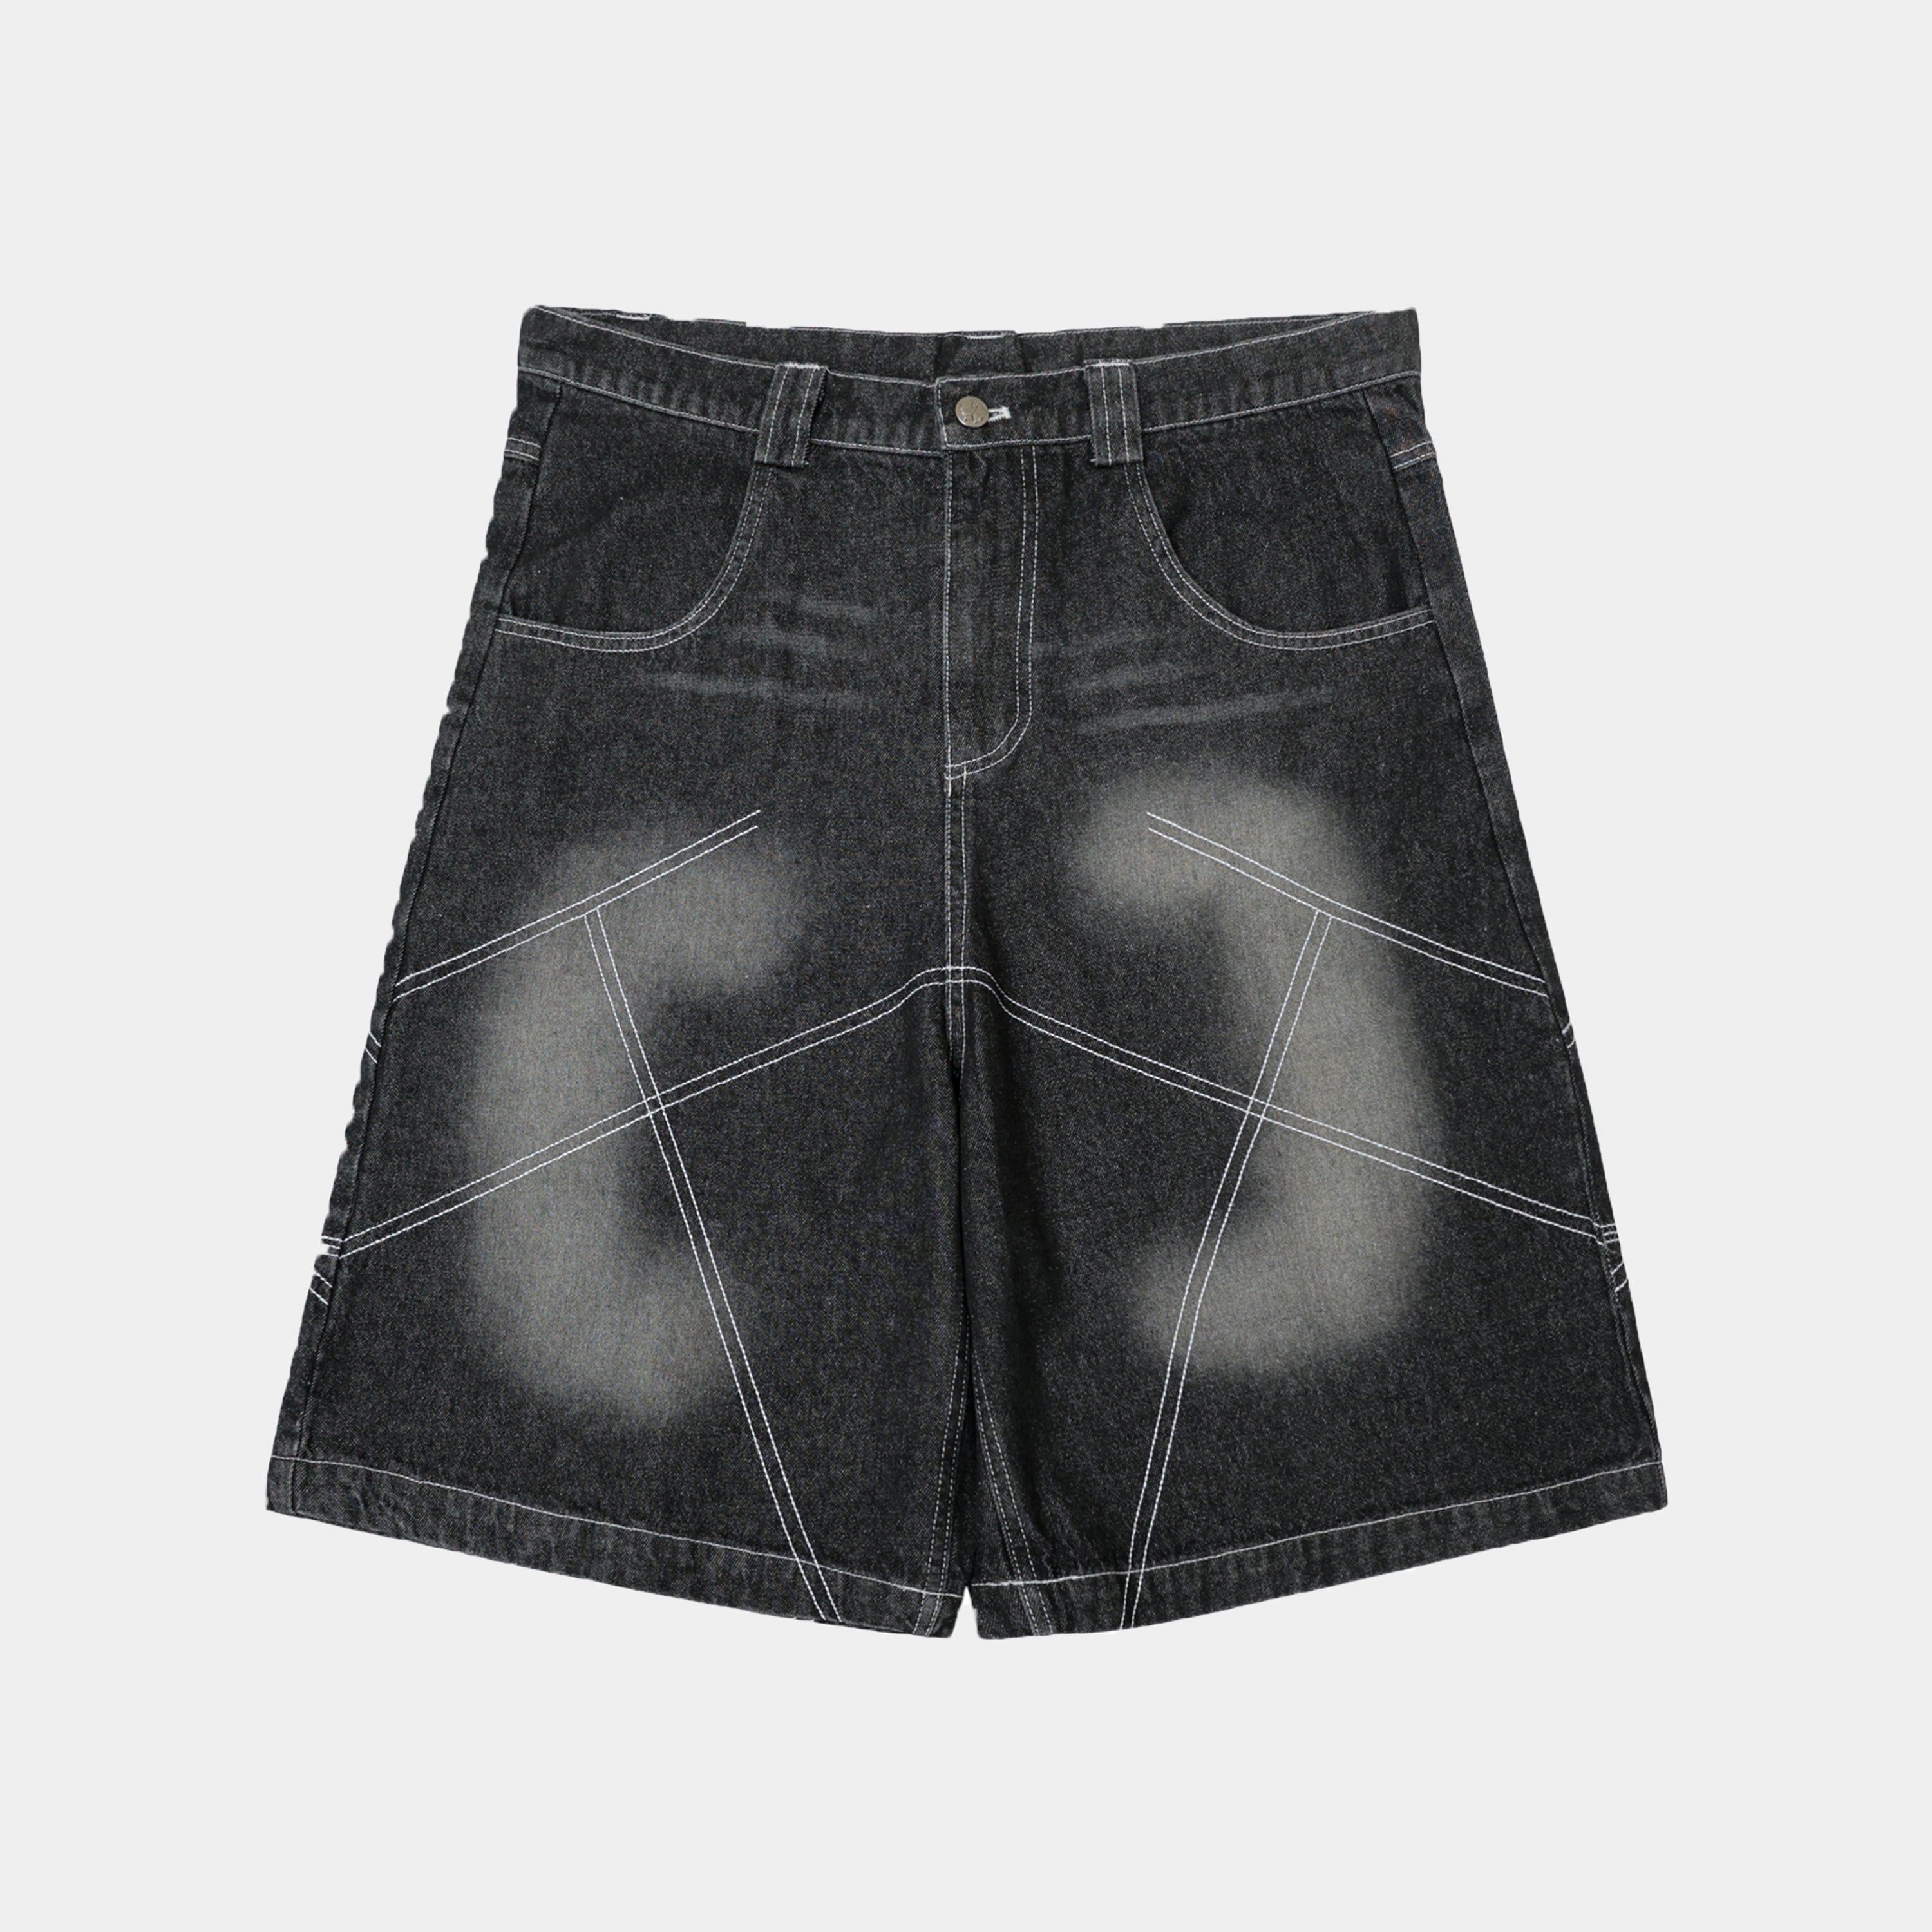 'Vintage' Shorts - Santo 